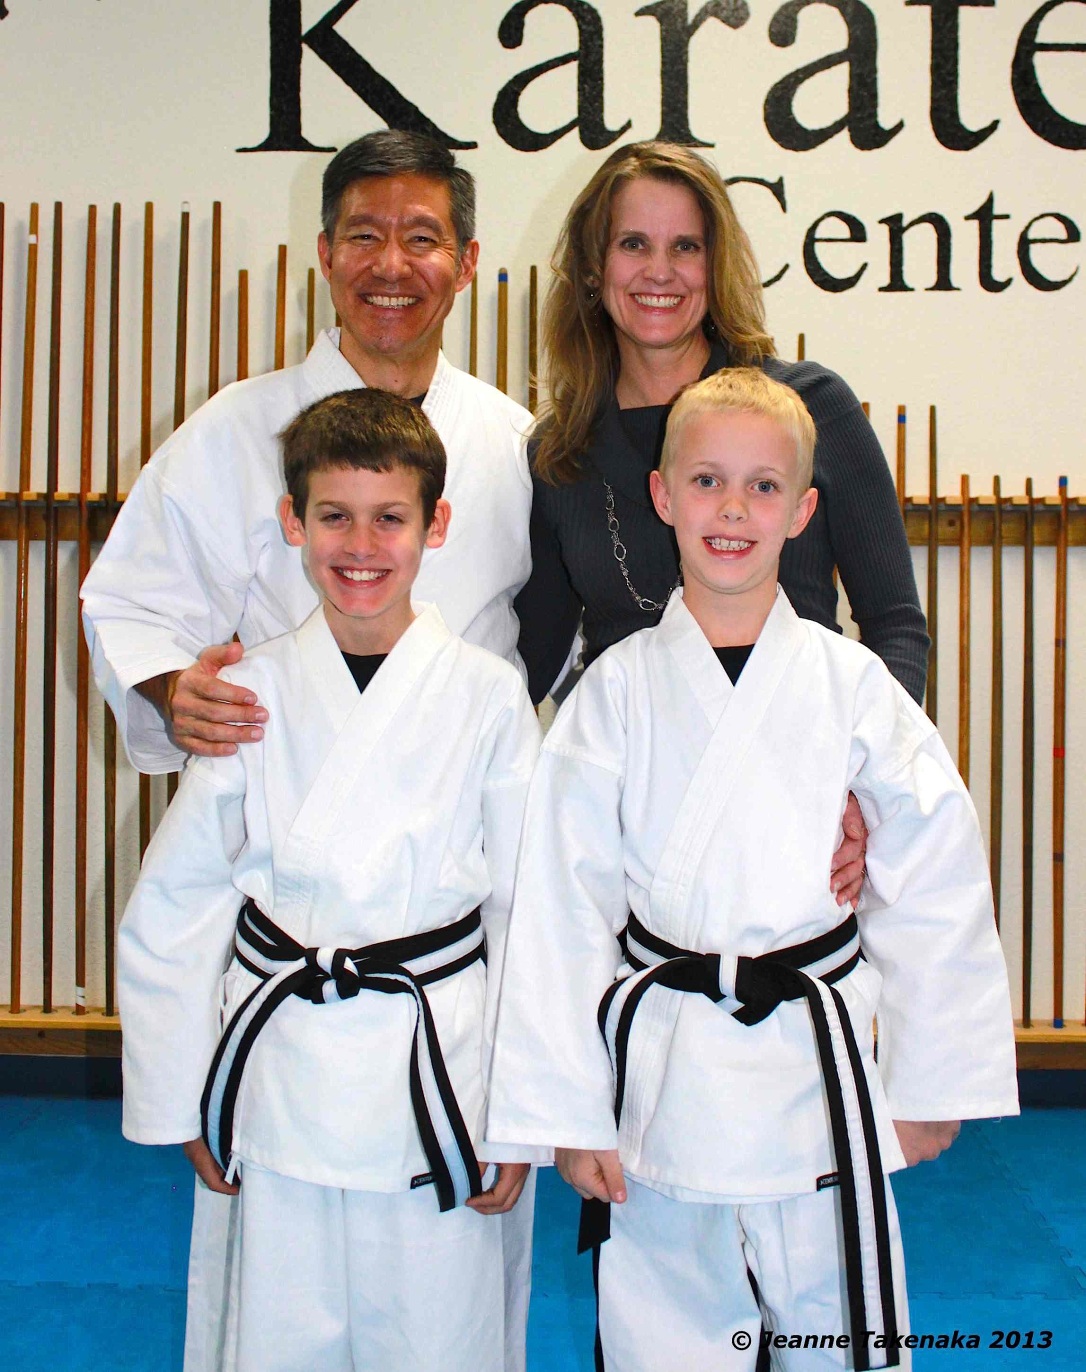 Karate family pic